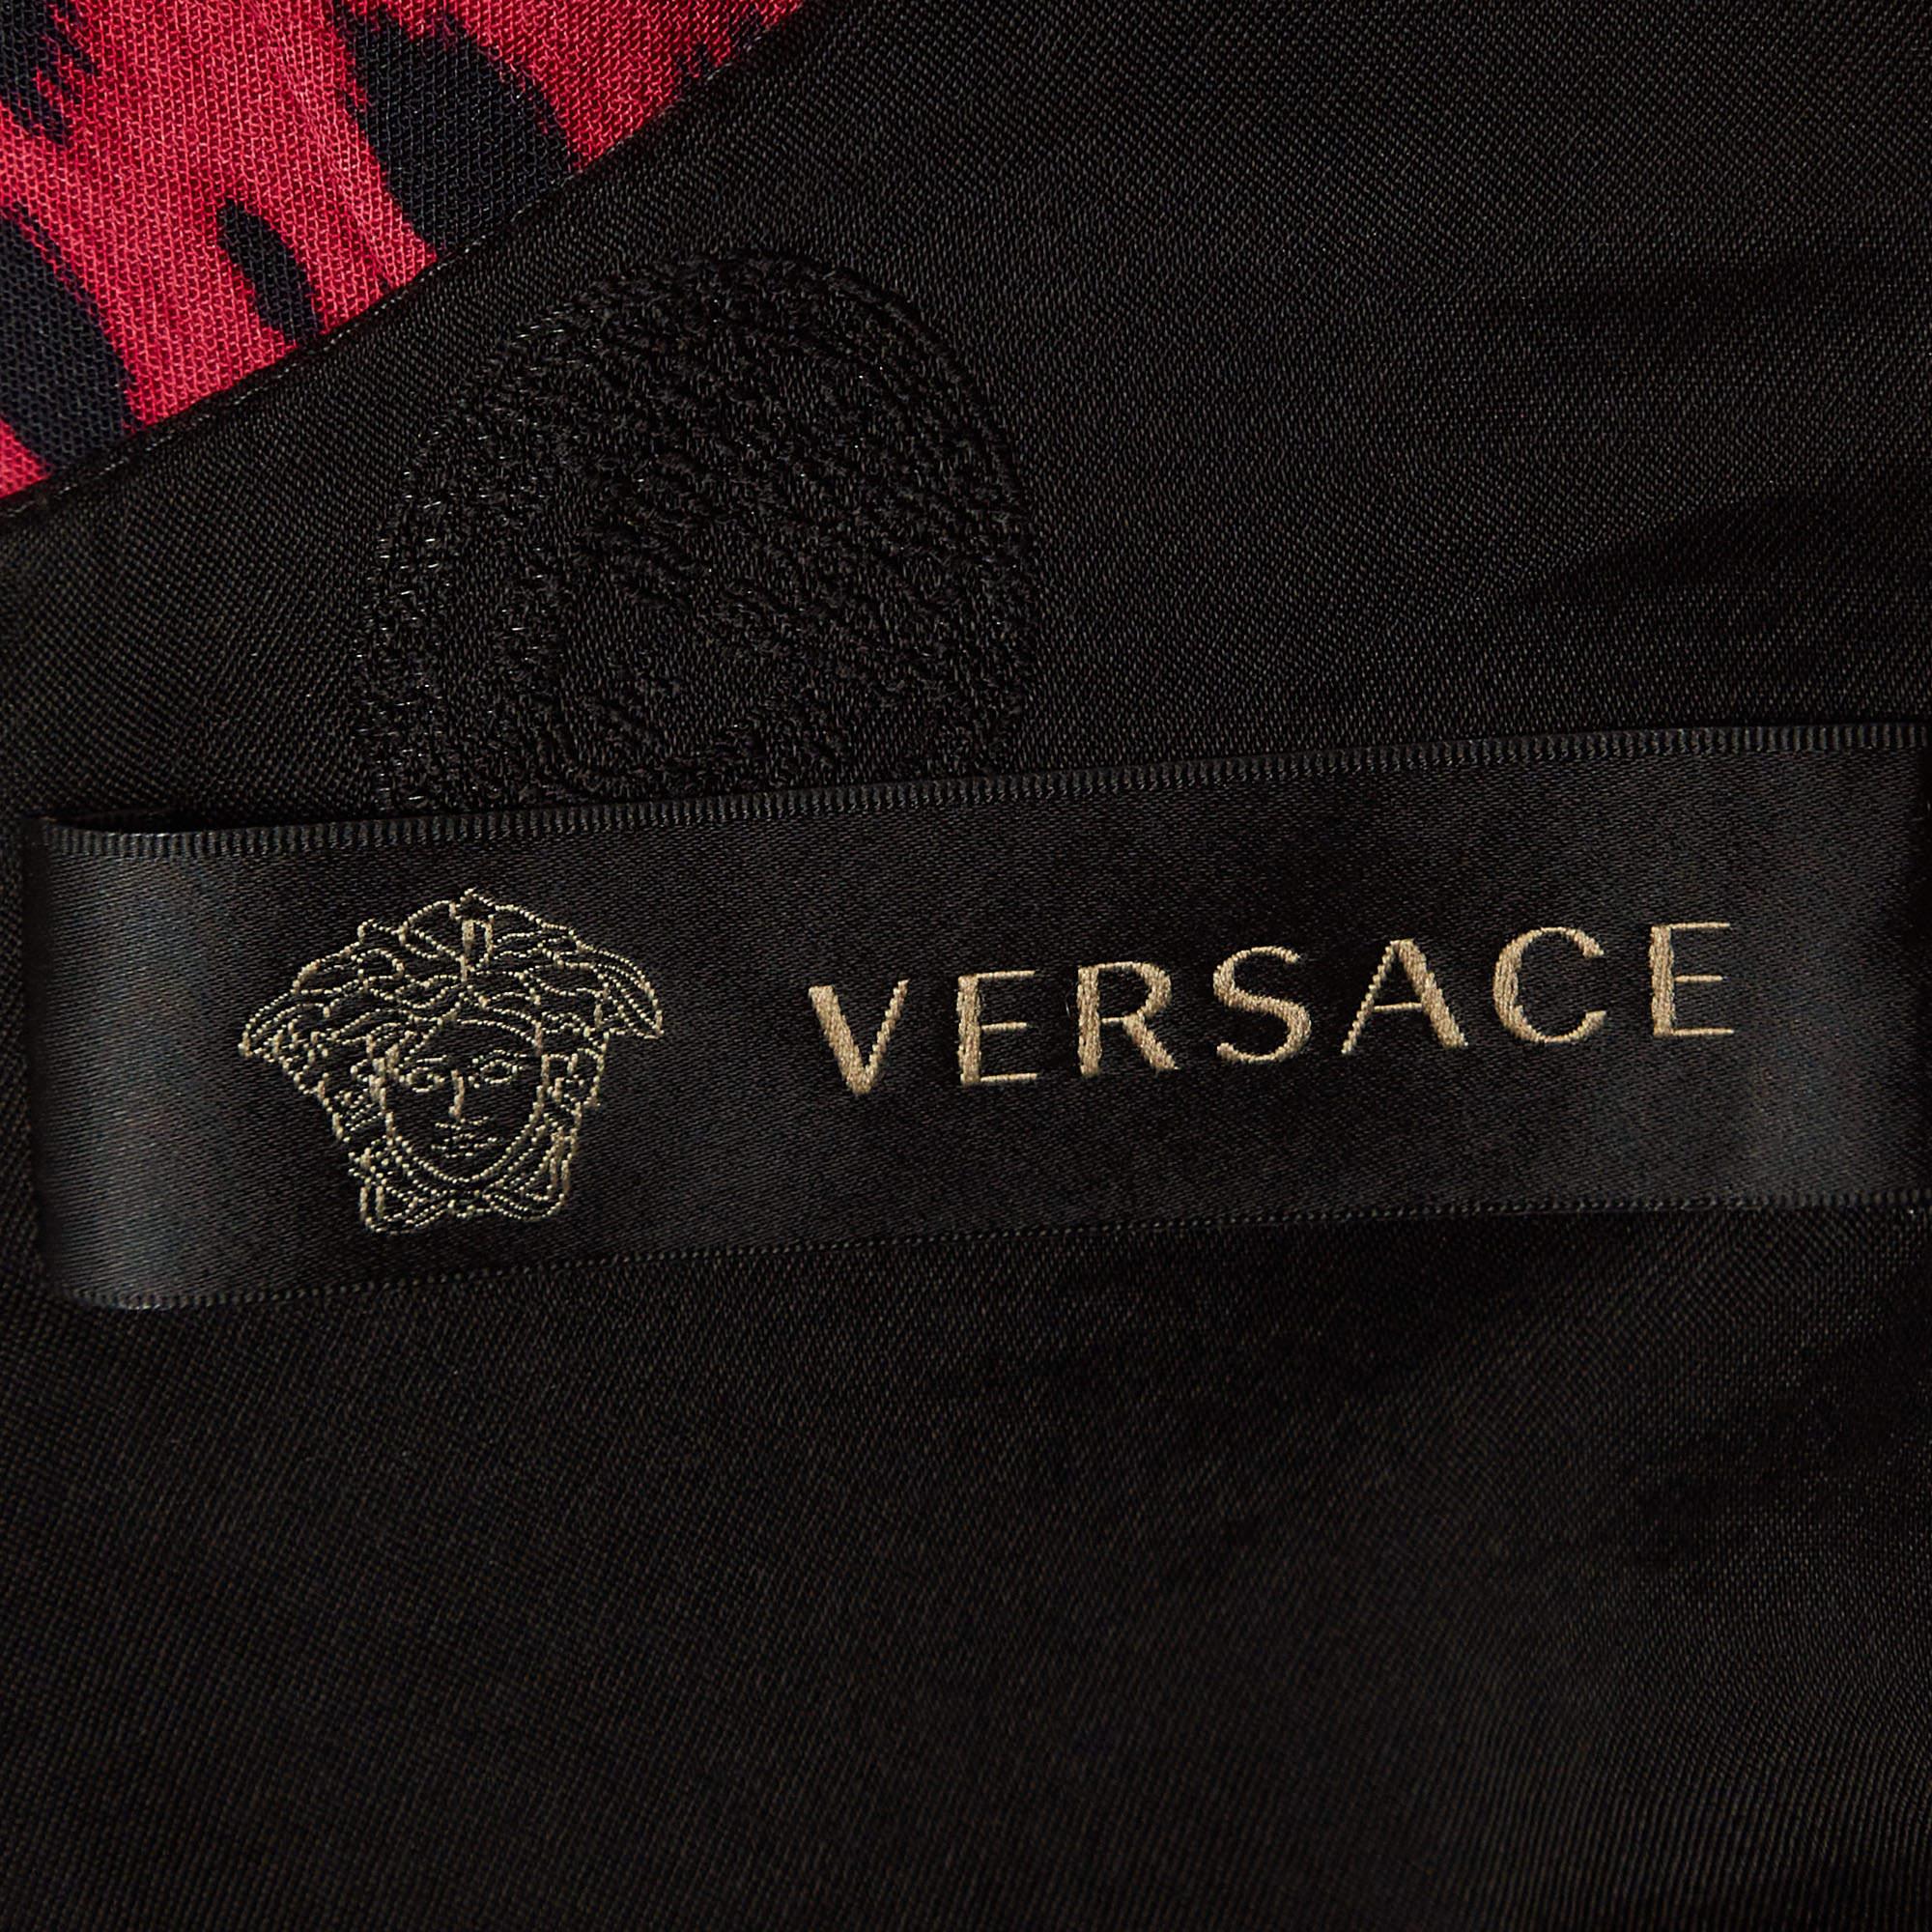 Versace Rosa Leopard Print Krepp getäfelten Etuikleid S Damen im Angebot